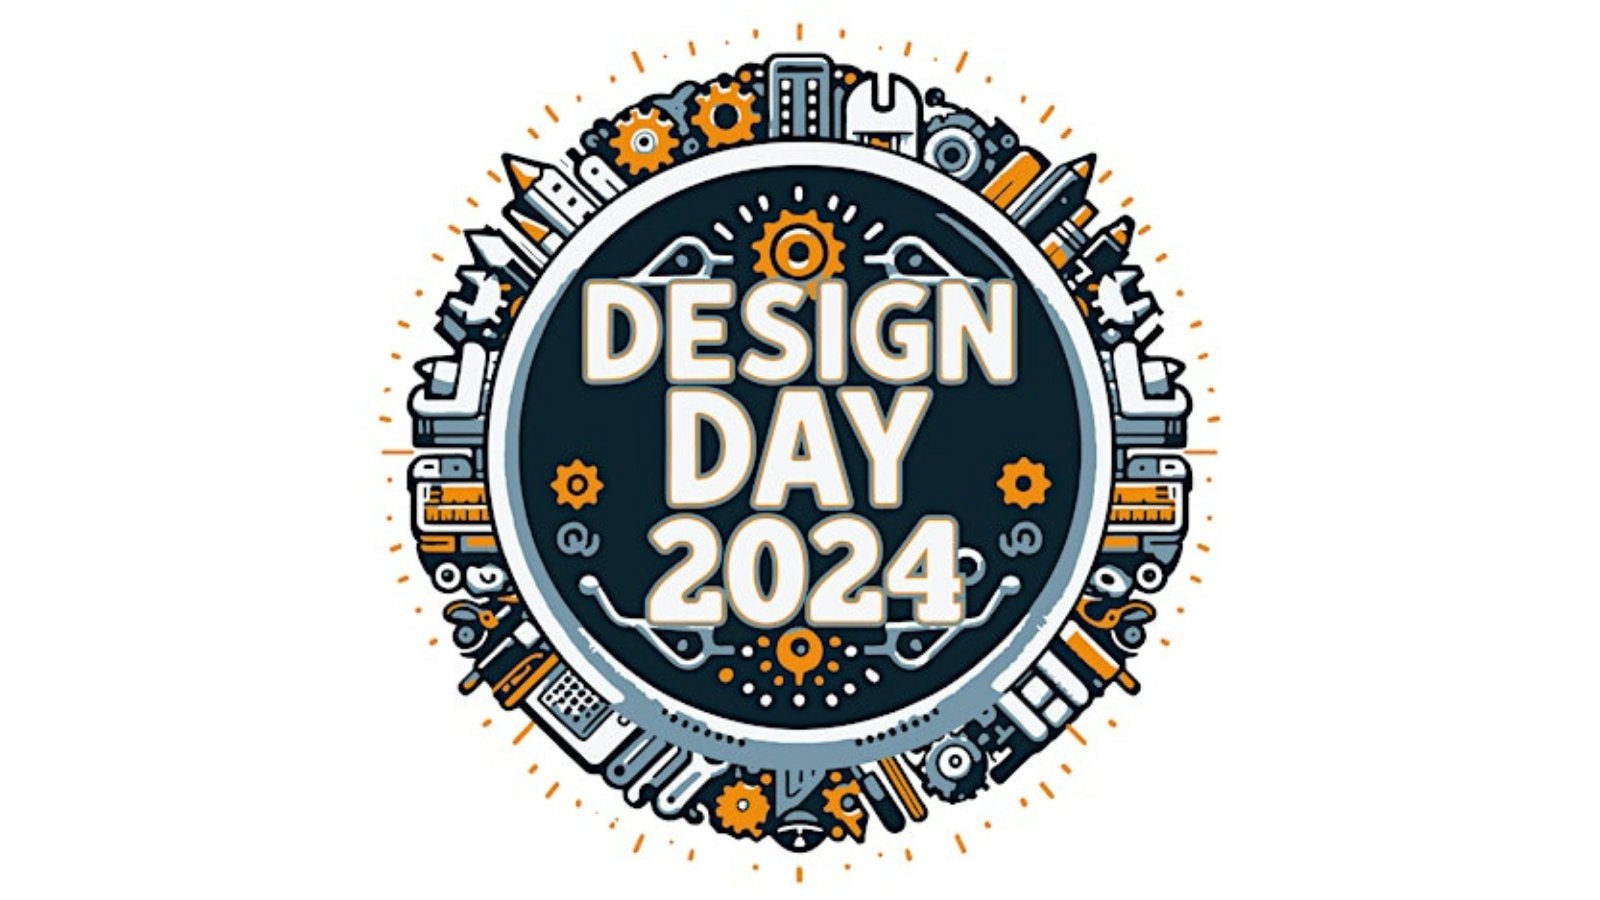 Design Day 2024 logo